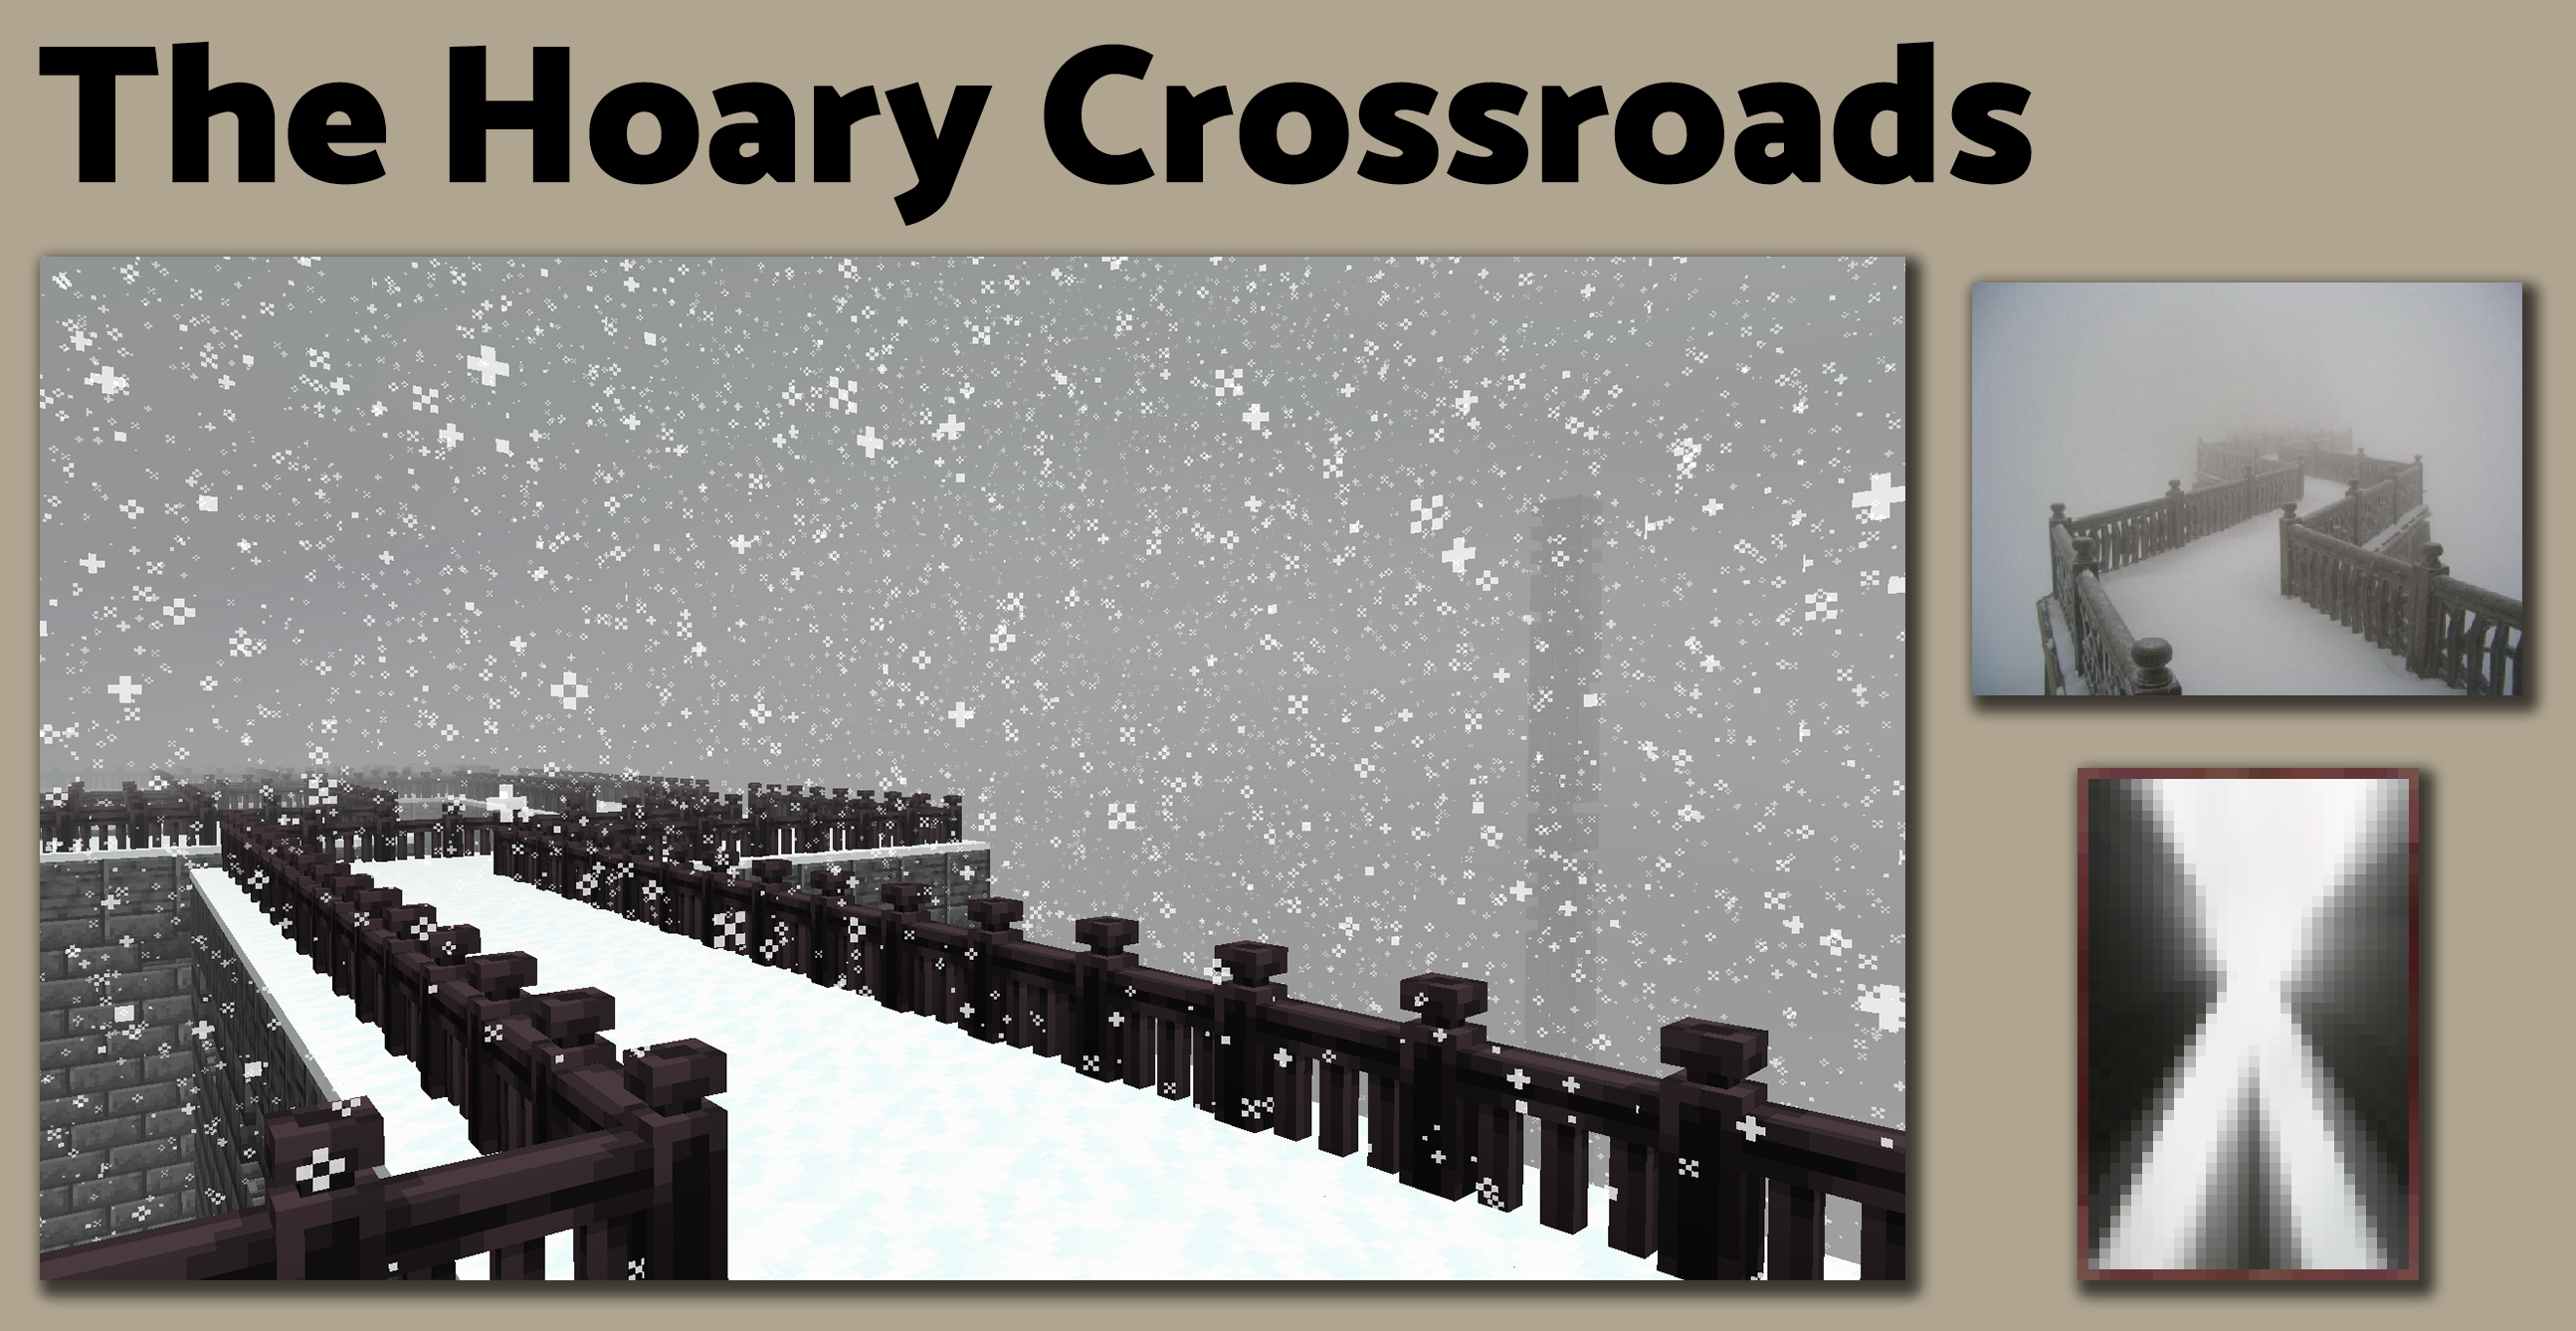 The Hoary Crossroads